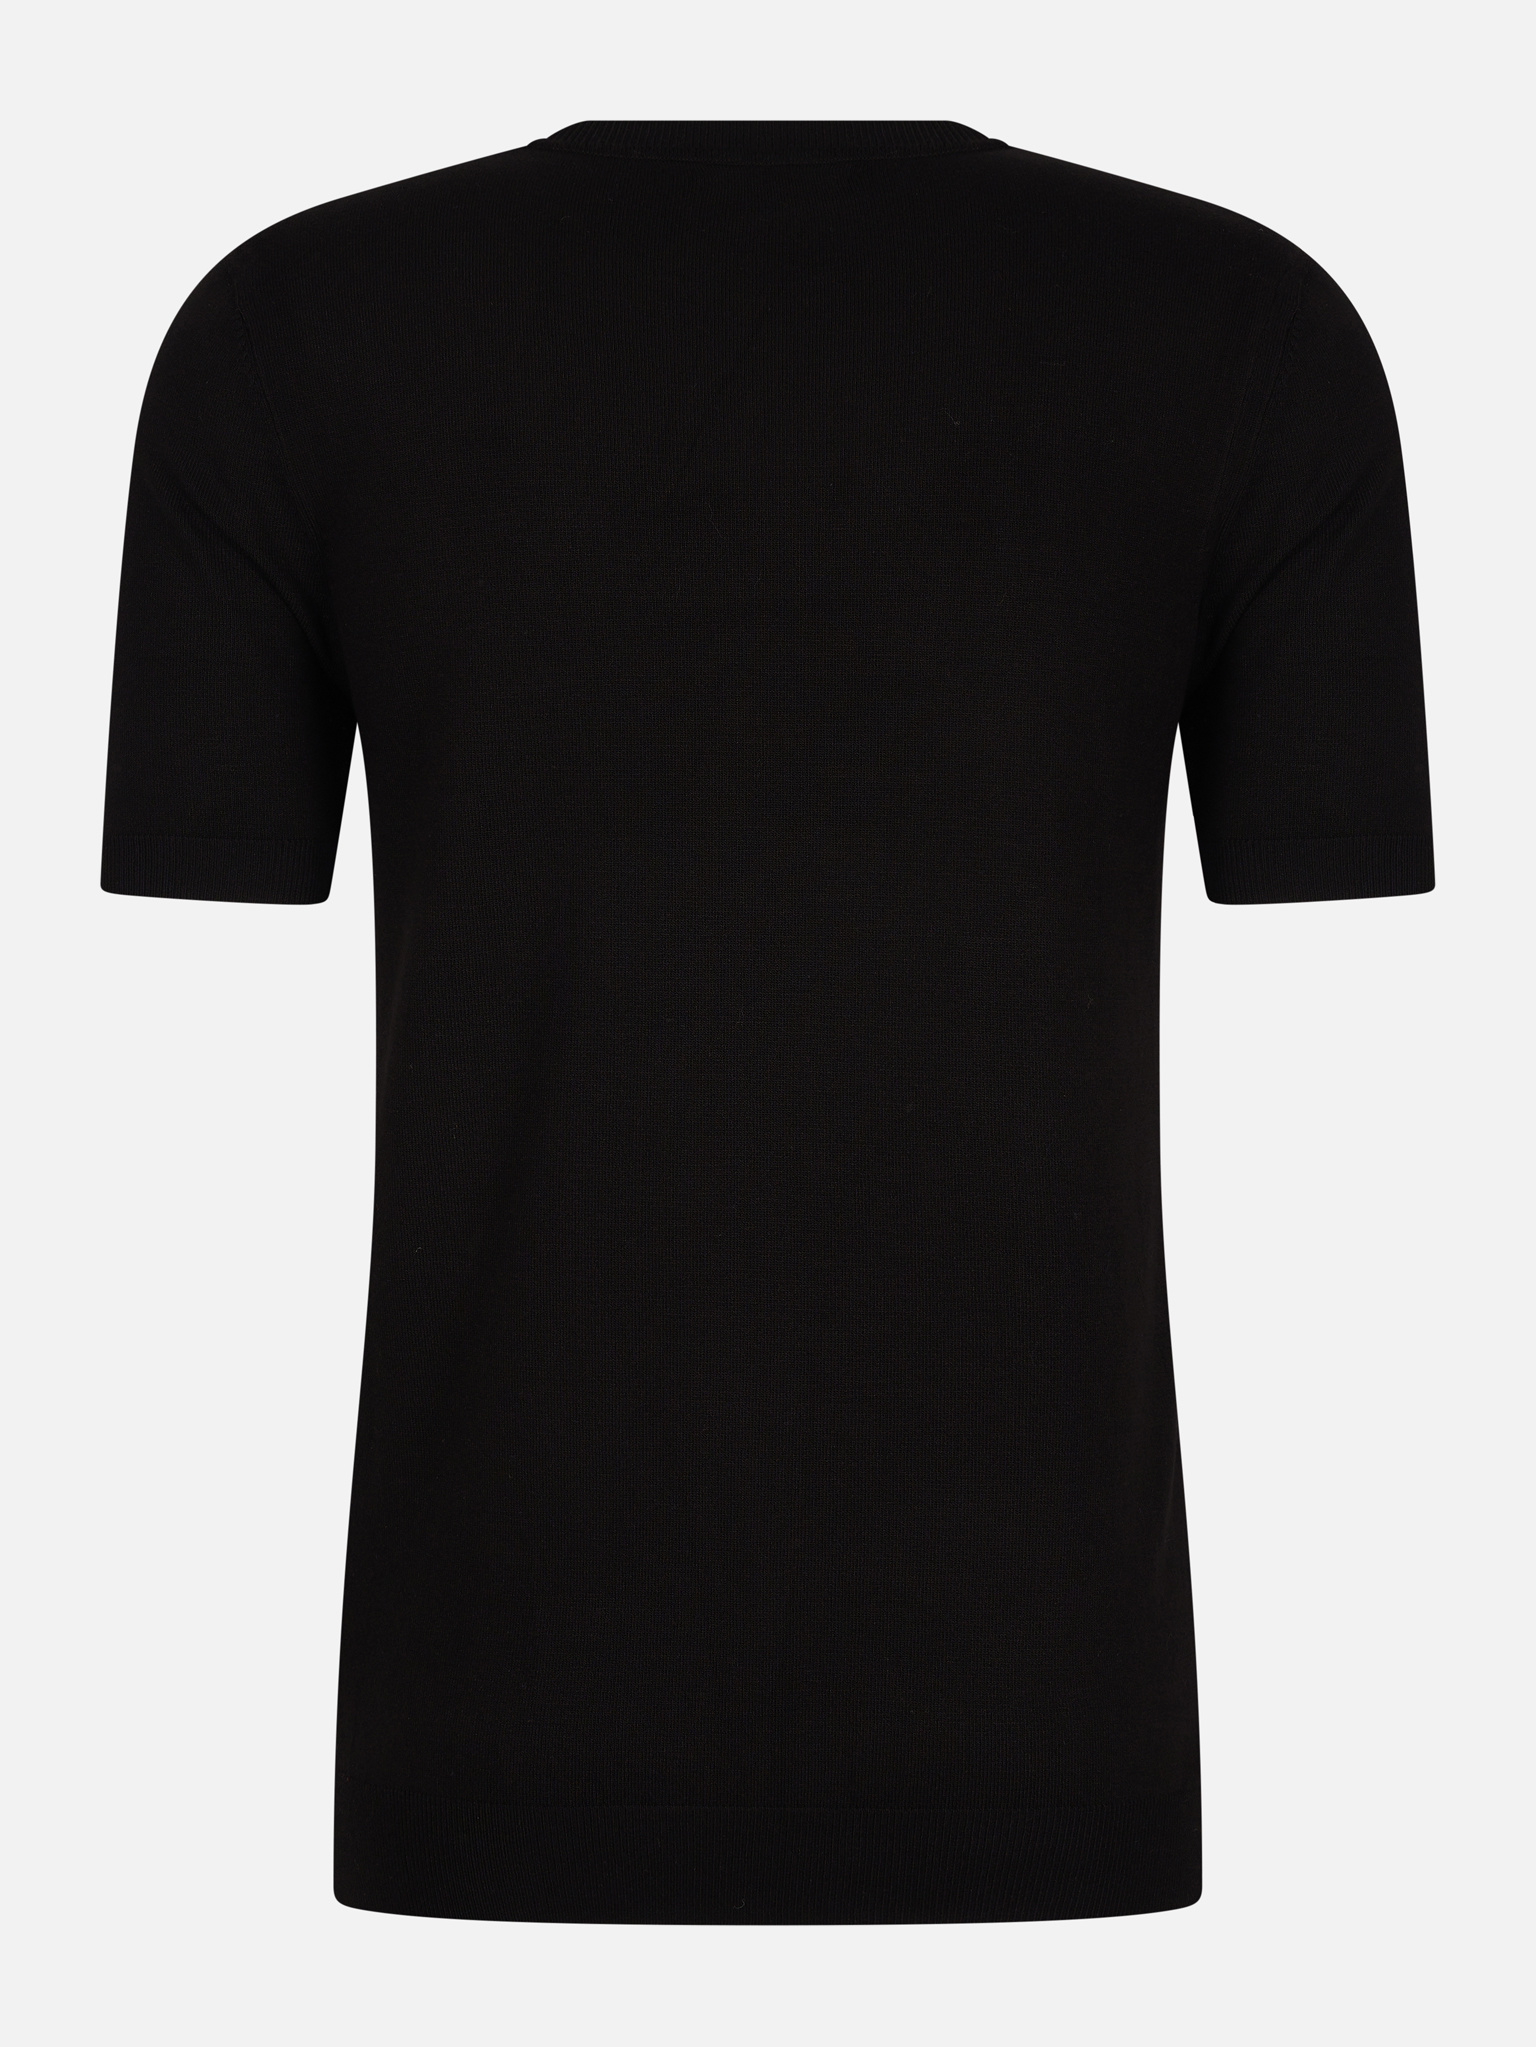 bespotten Verslaving dynamisch Zwart T-shirt heren kopen voor €29,95 | Valenci - VALENCI